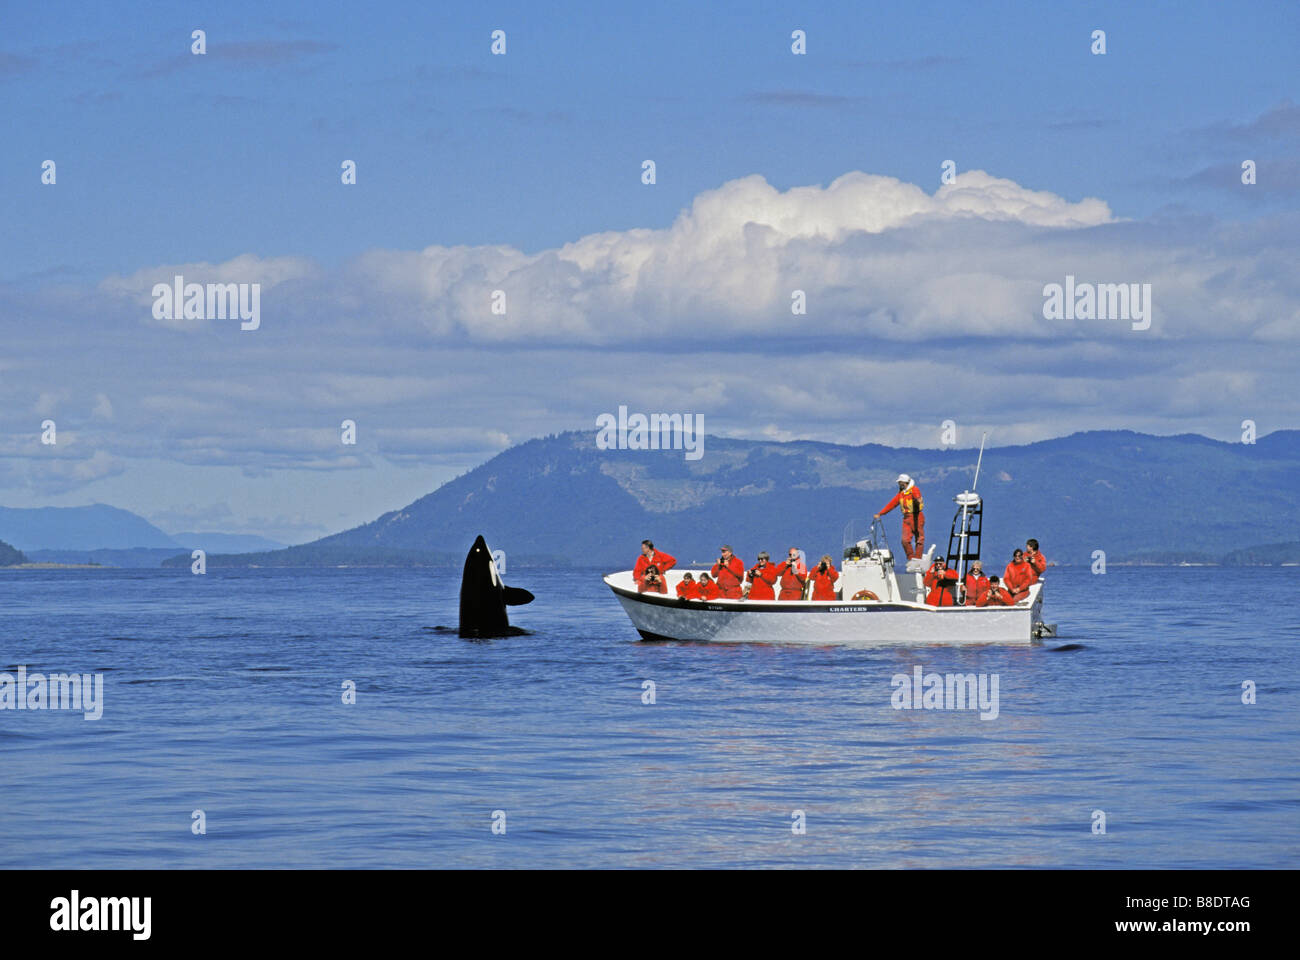 tk0630, Thomas Kitchin; Orca/Killer Whale whale watchers  Vancouver Island, BC  Canada  Haro Strait  Orcinus orca Stock Photo